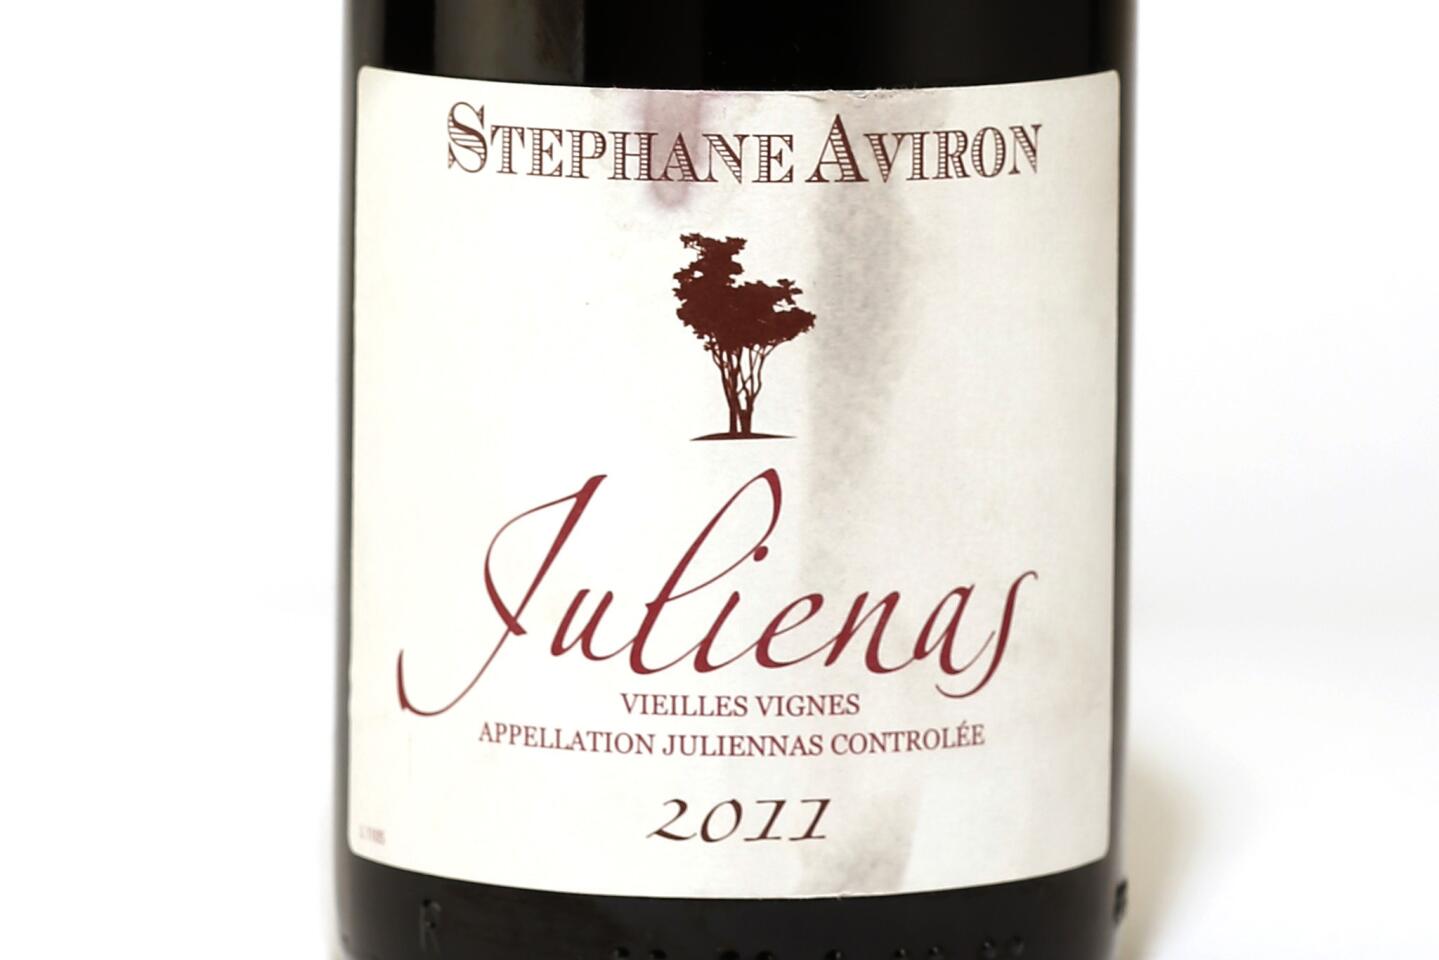 2011 Stephane Aviron Julienas Vieilles Vignes